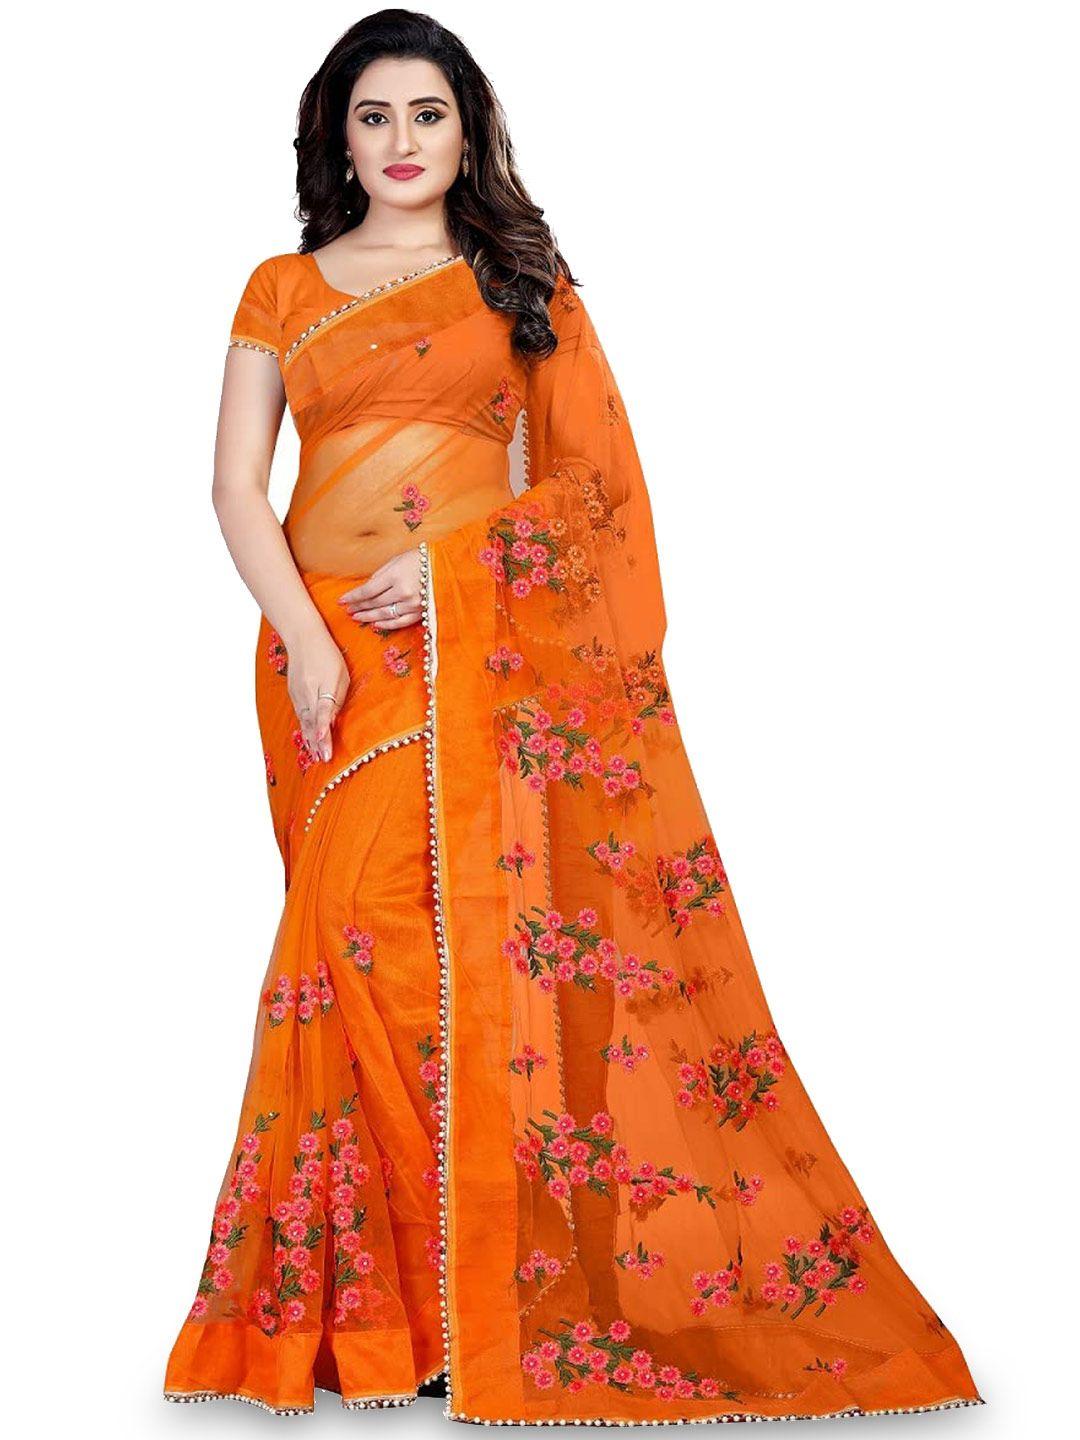 nityanta fab orange & pink floral embroidered net ikat saree